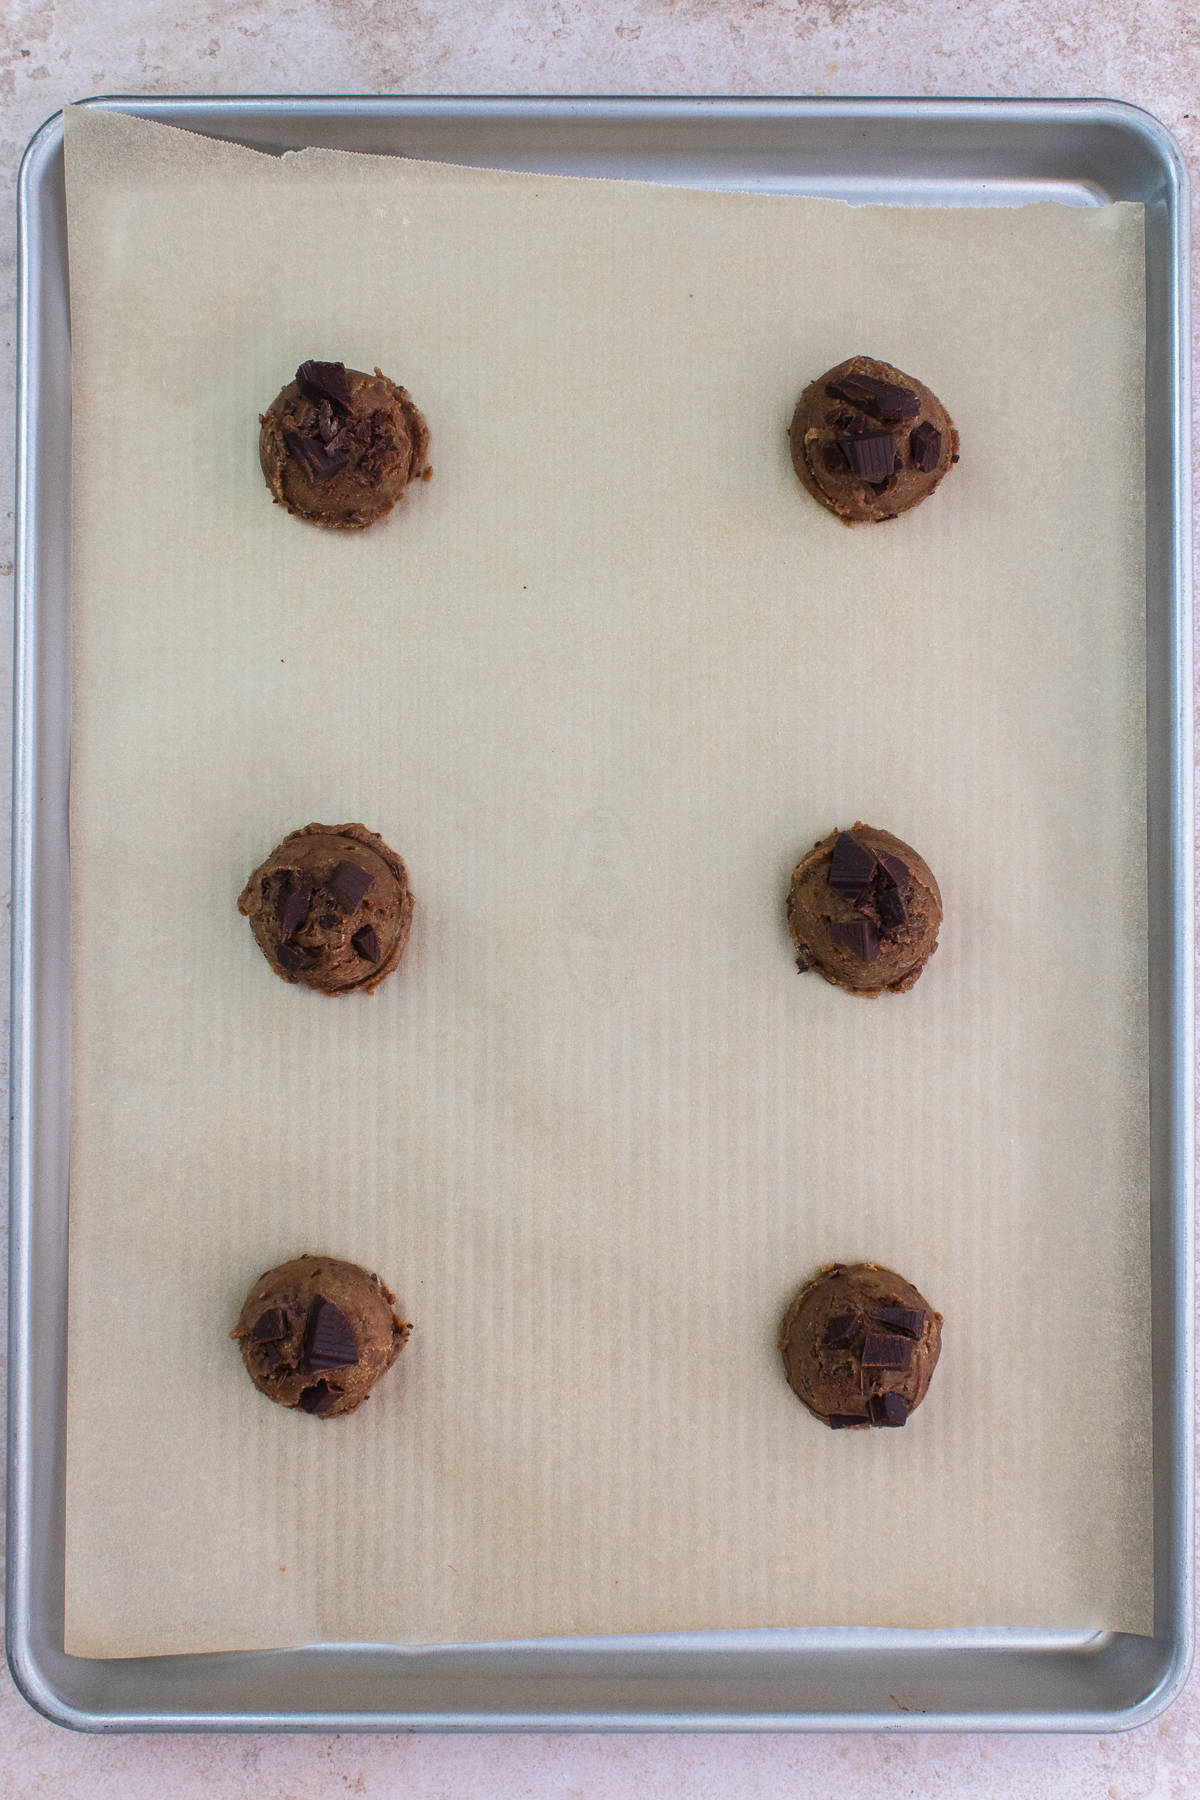 Six raw cookie dough balls on baking sheet